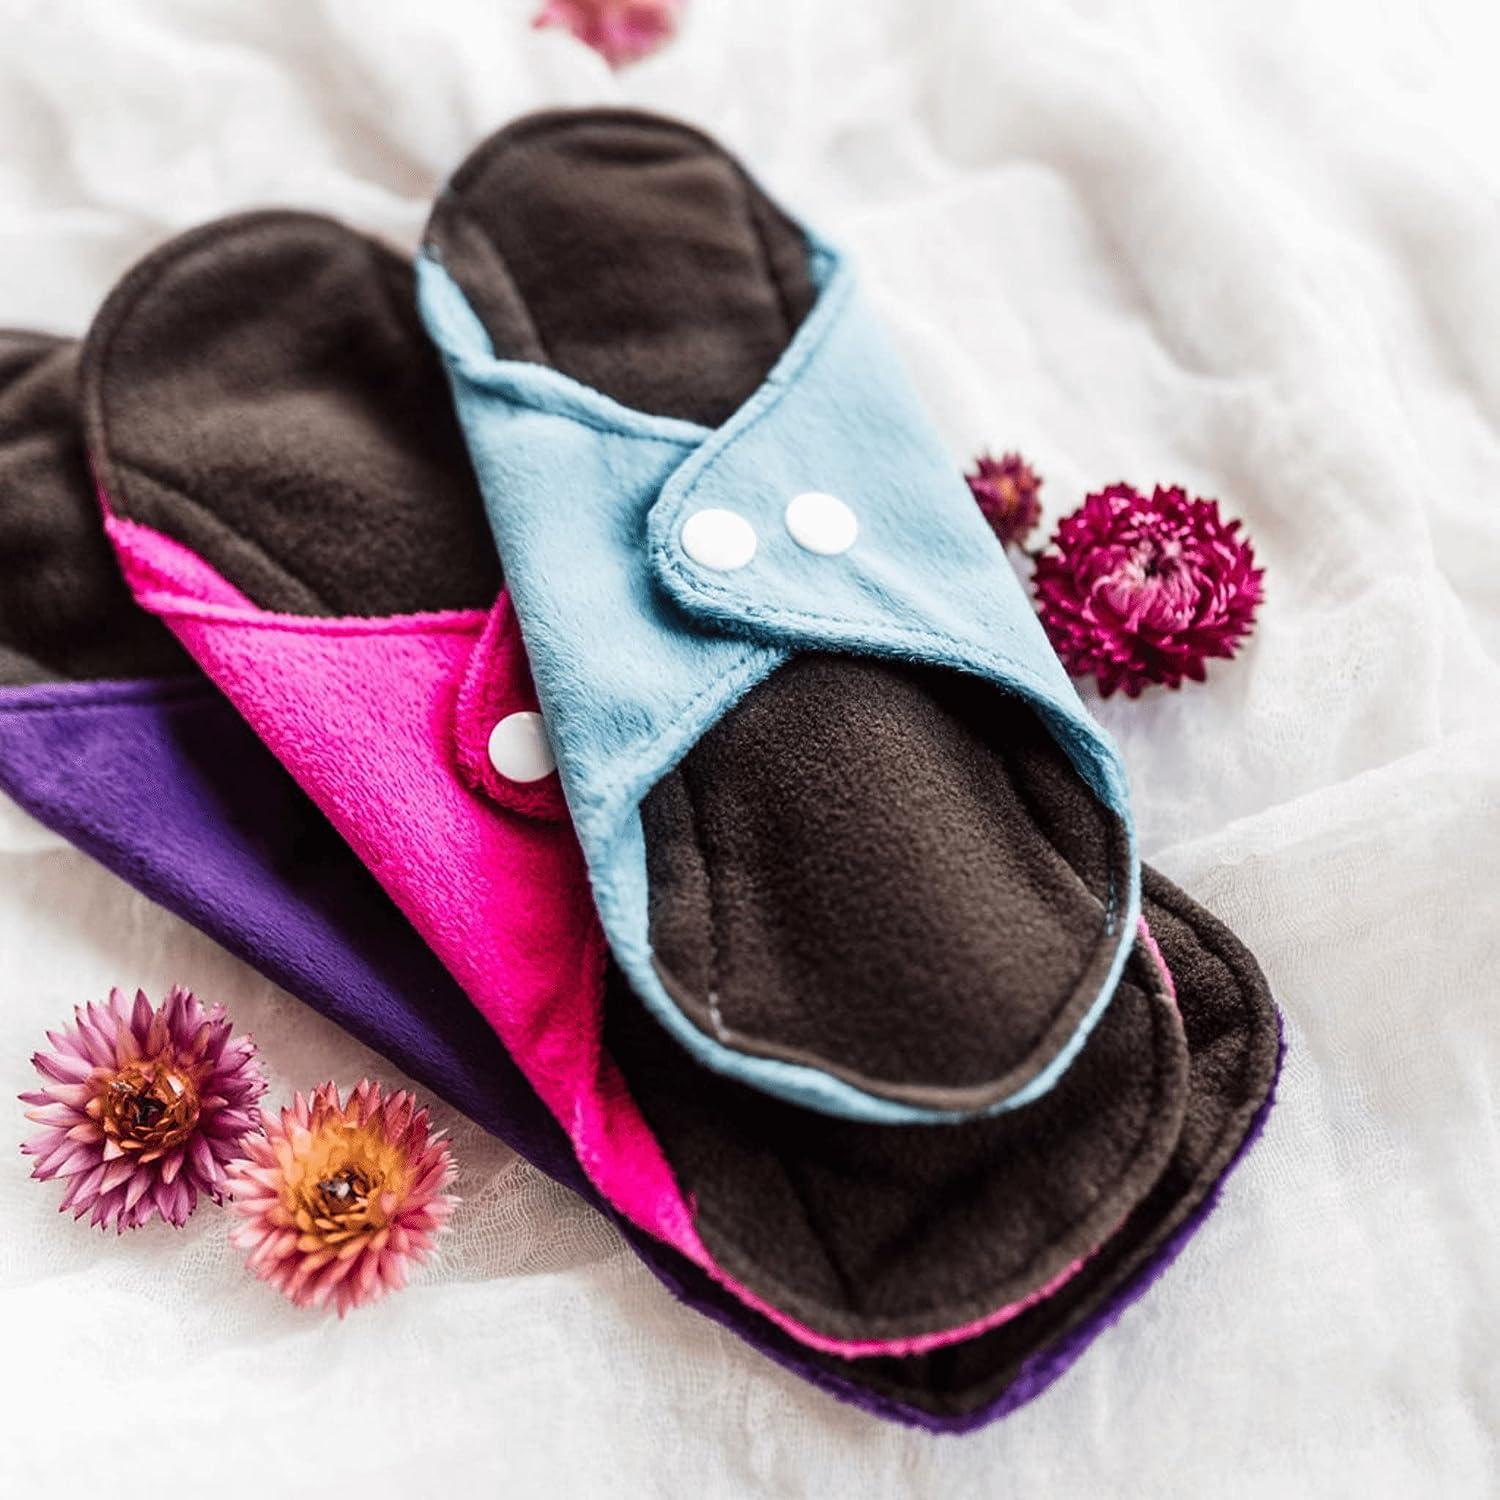 Femallay Reusable Cloth Menstrual Pads - Feminine Pads w/Charcoal